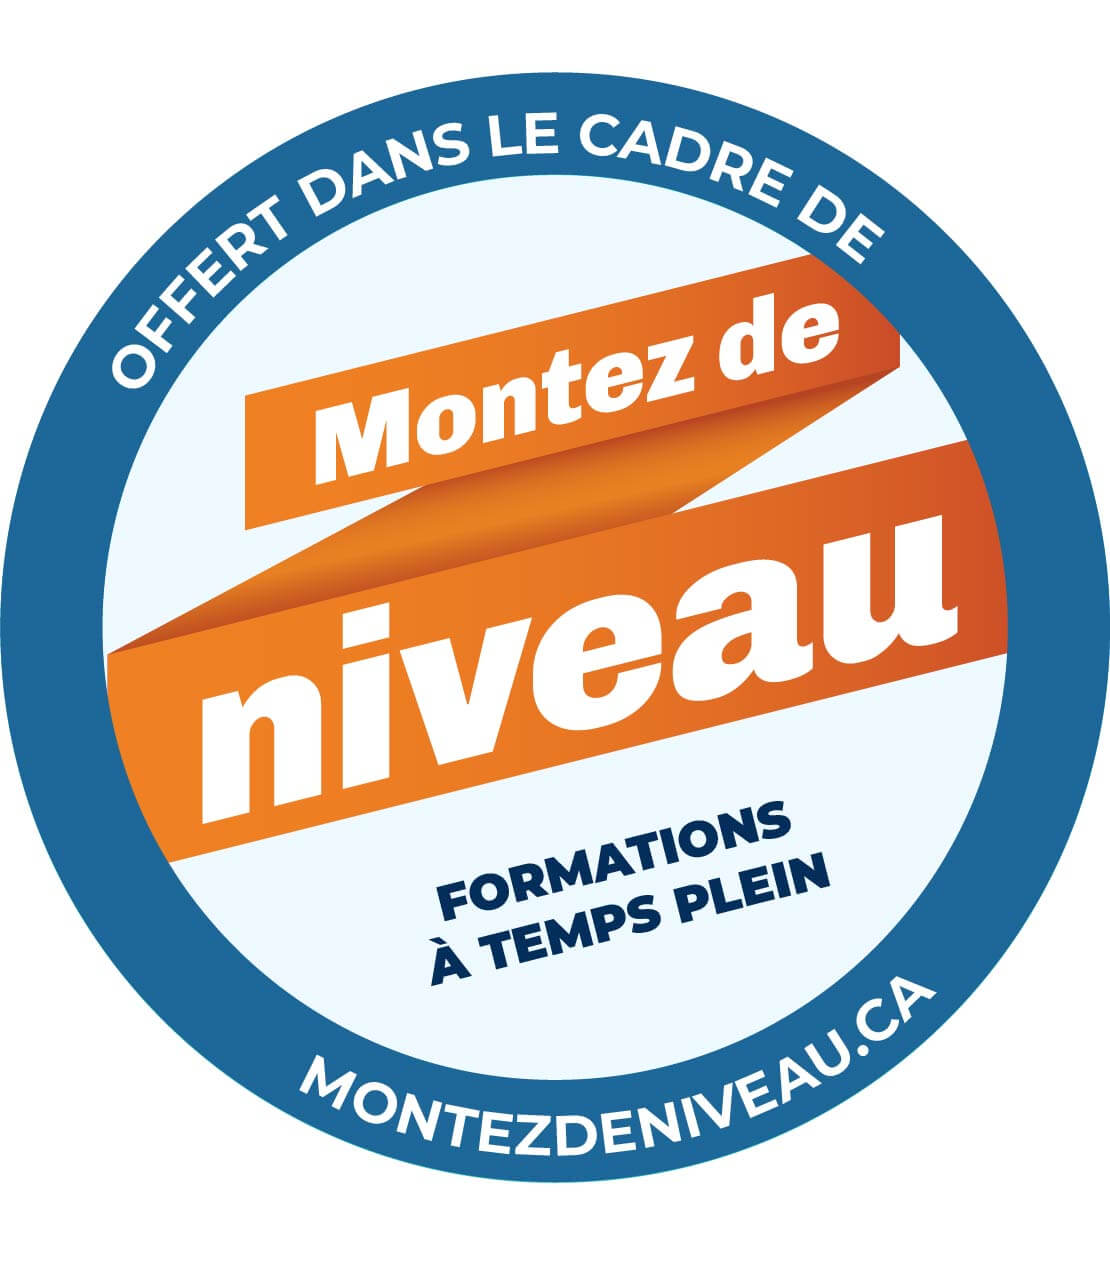 Logo of "Montez de niveau" program promoting full-time training courses at montezdeniveau.ca.